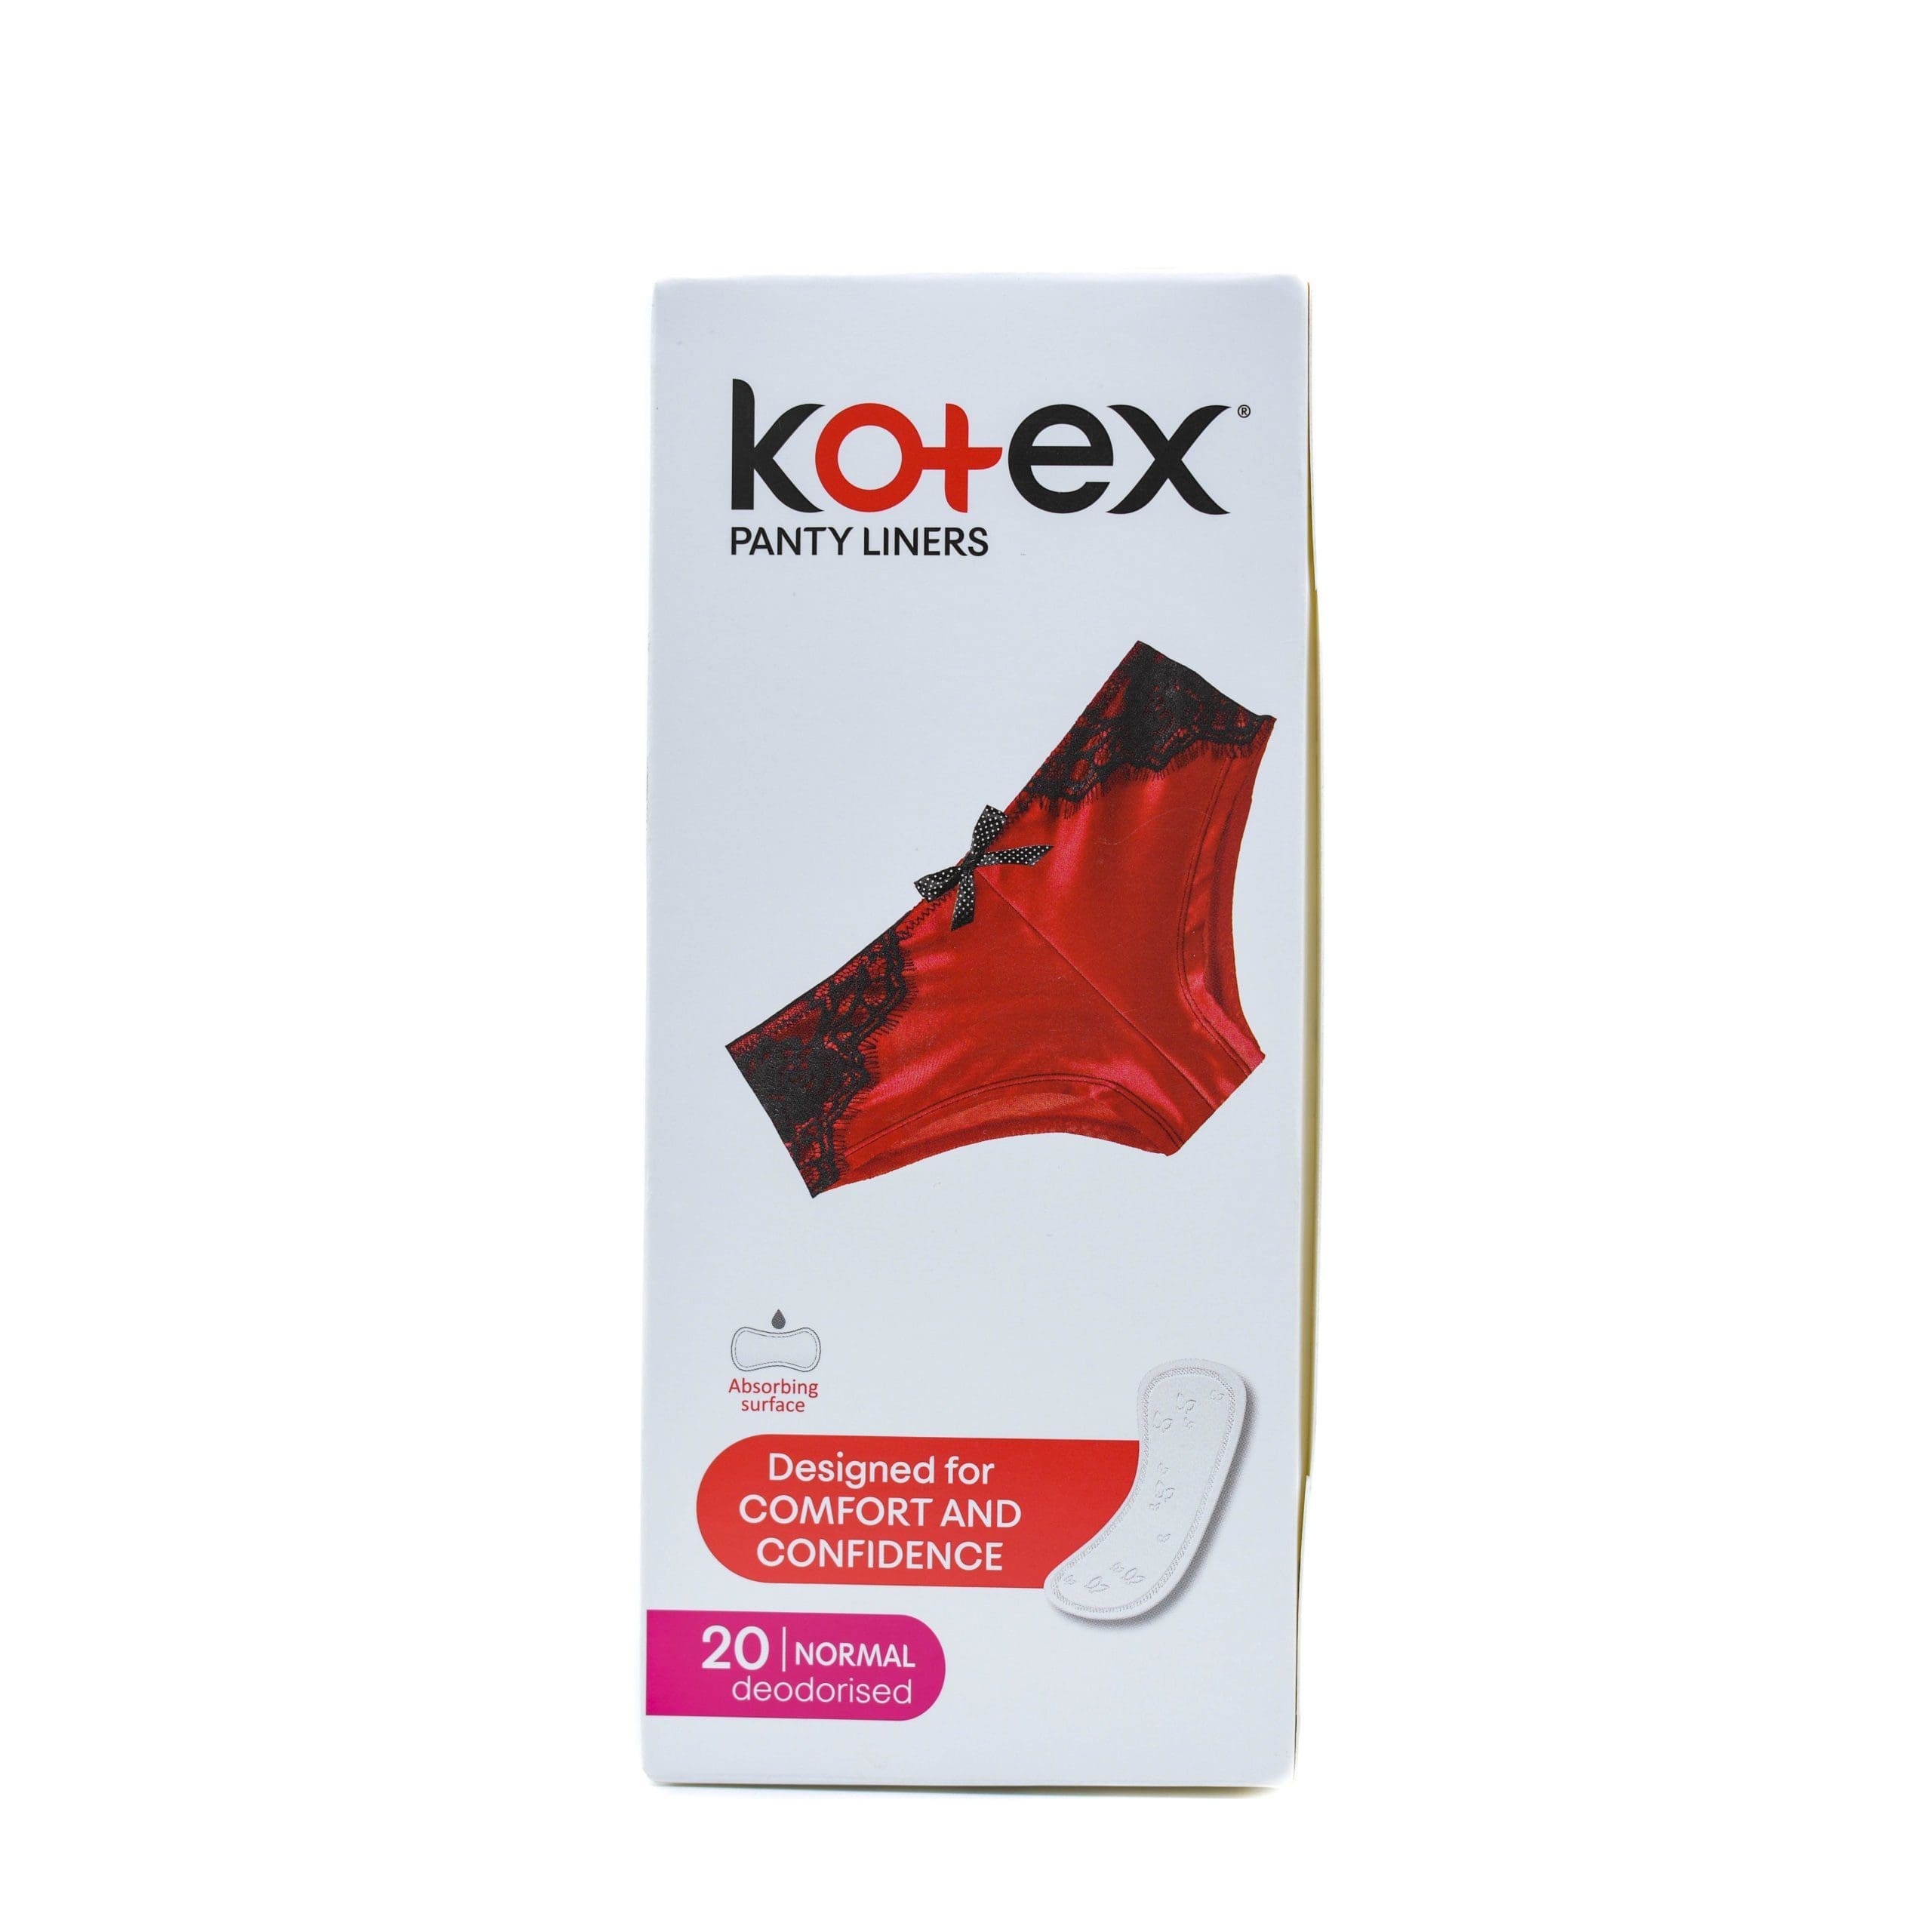 Kotex Tampon Mini 16s, Tampons, Sanitary Care